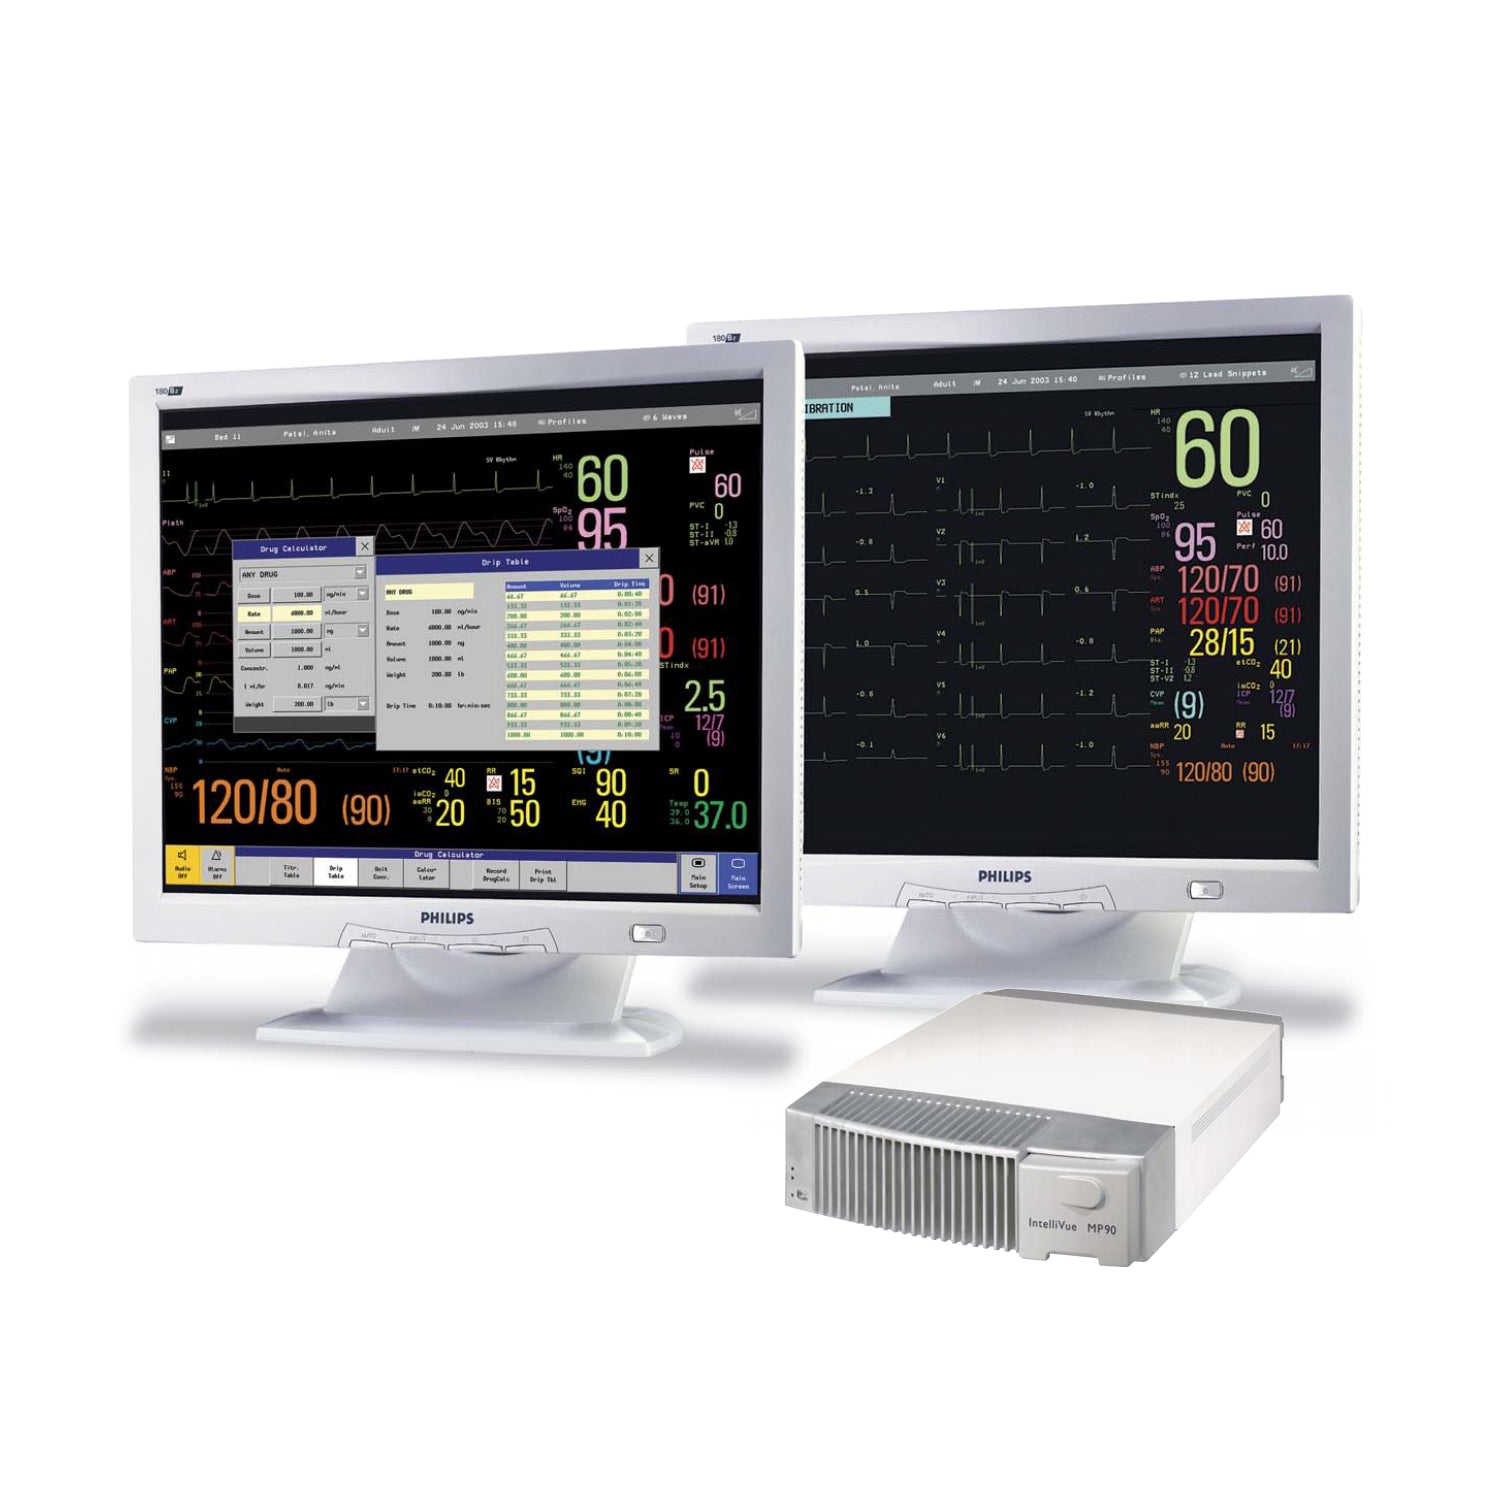 Philips Intellivue MP90 Patient Monitor